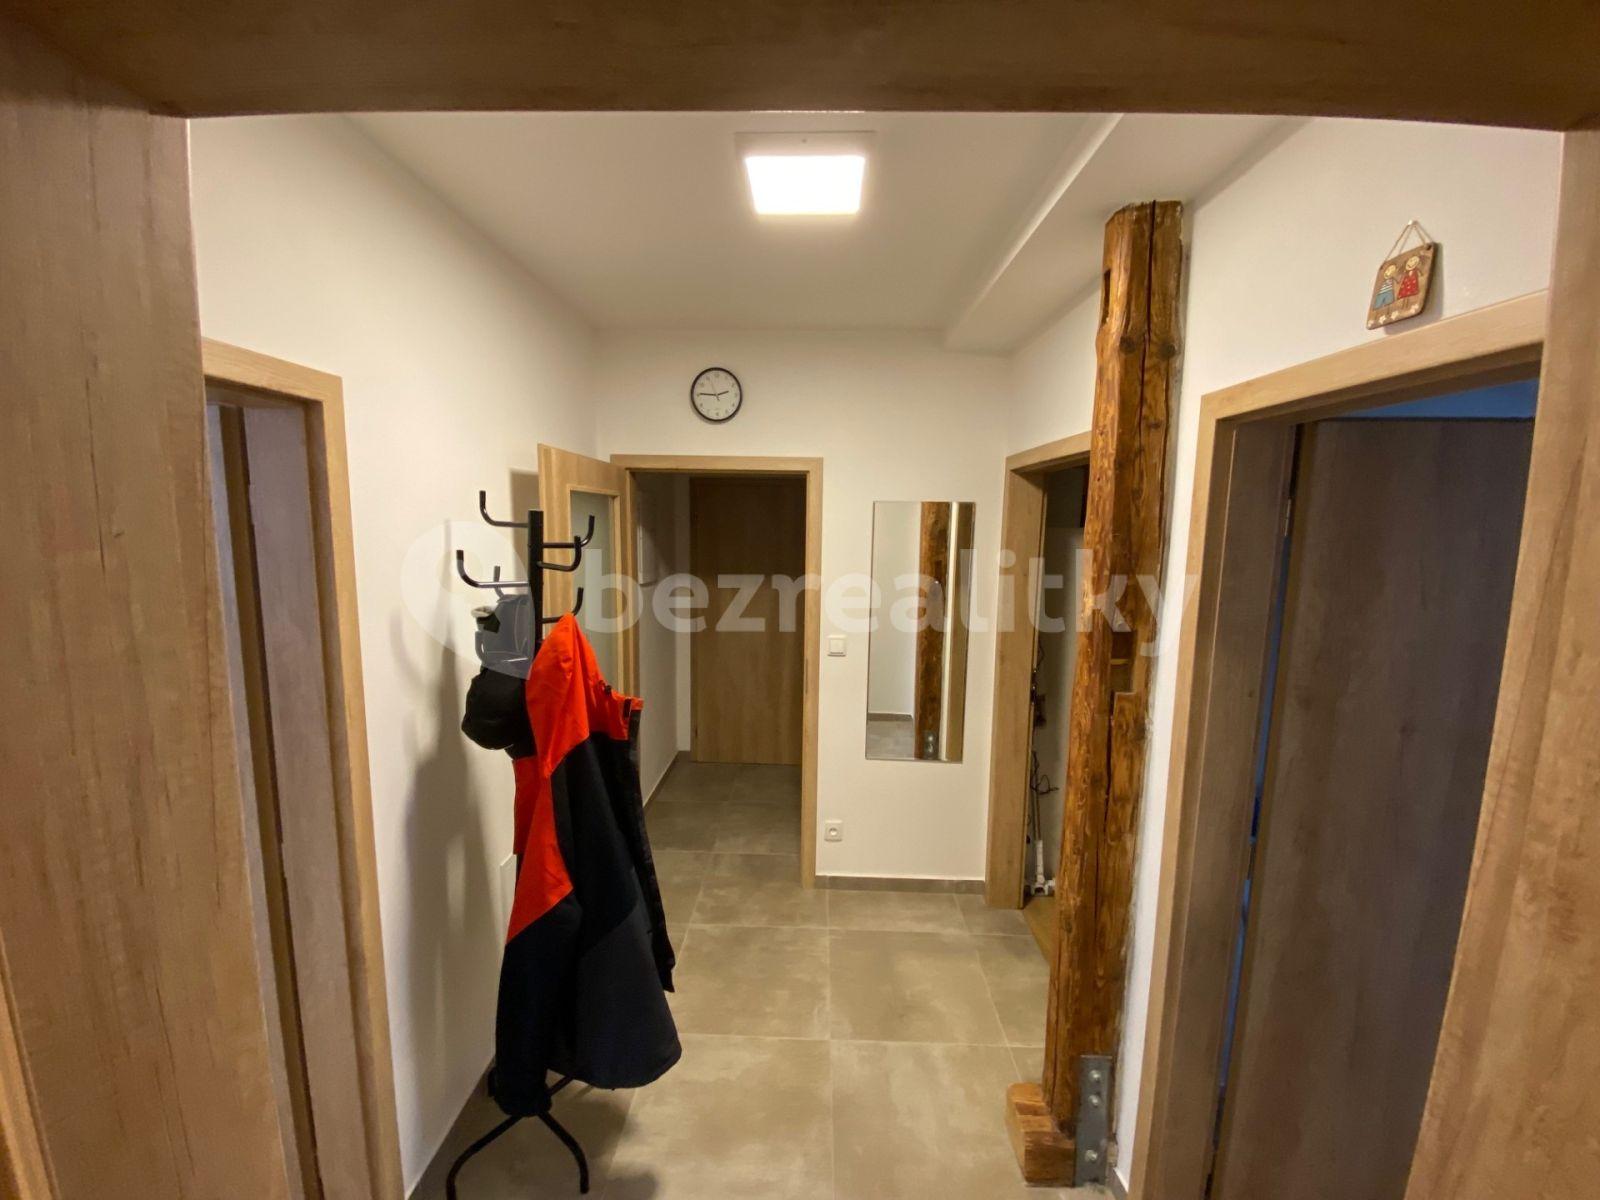 2 bedroom with open-plan kitchen flat to rent, 56 m², Kollárova, Jihlava, Vysočina Region